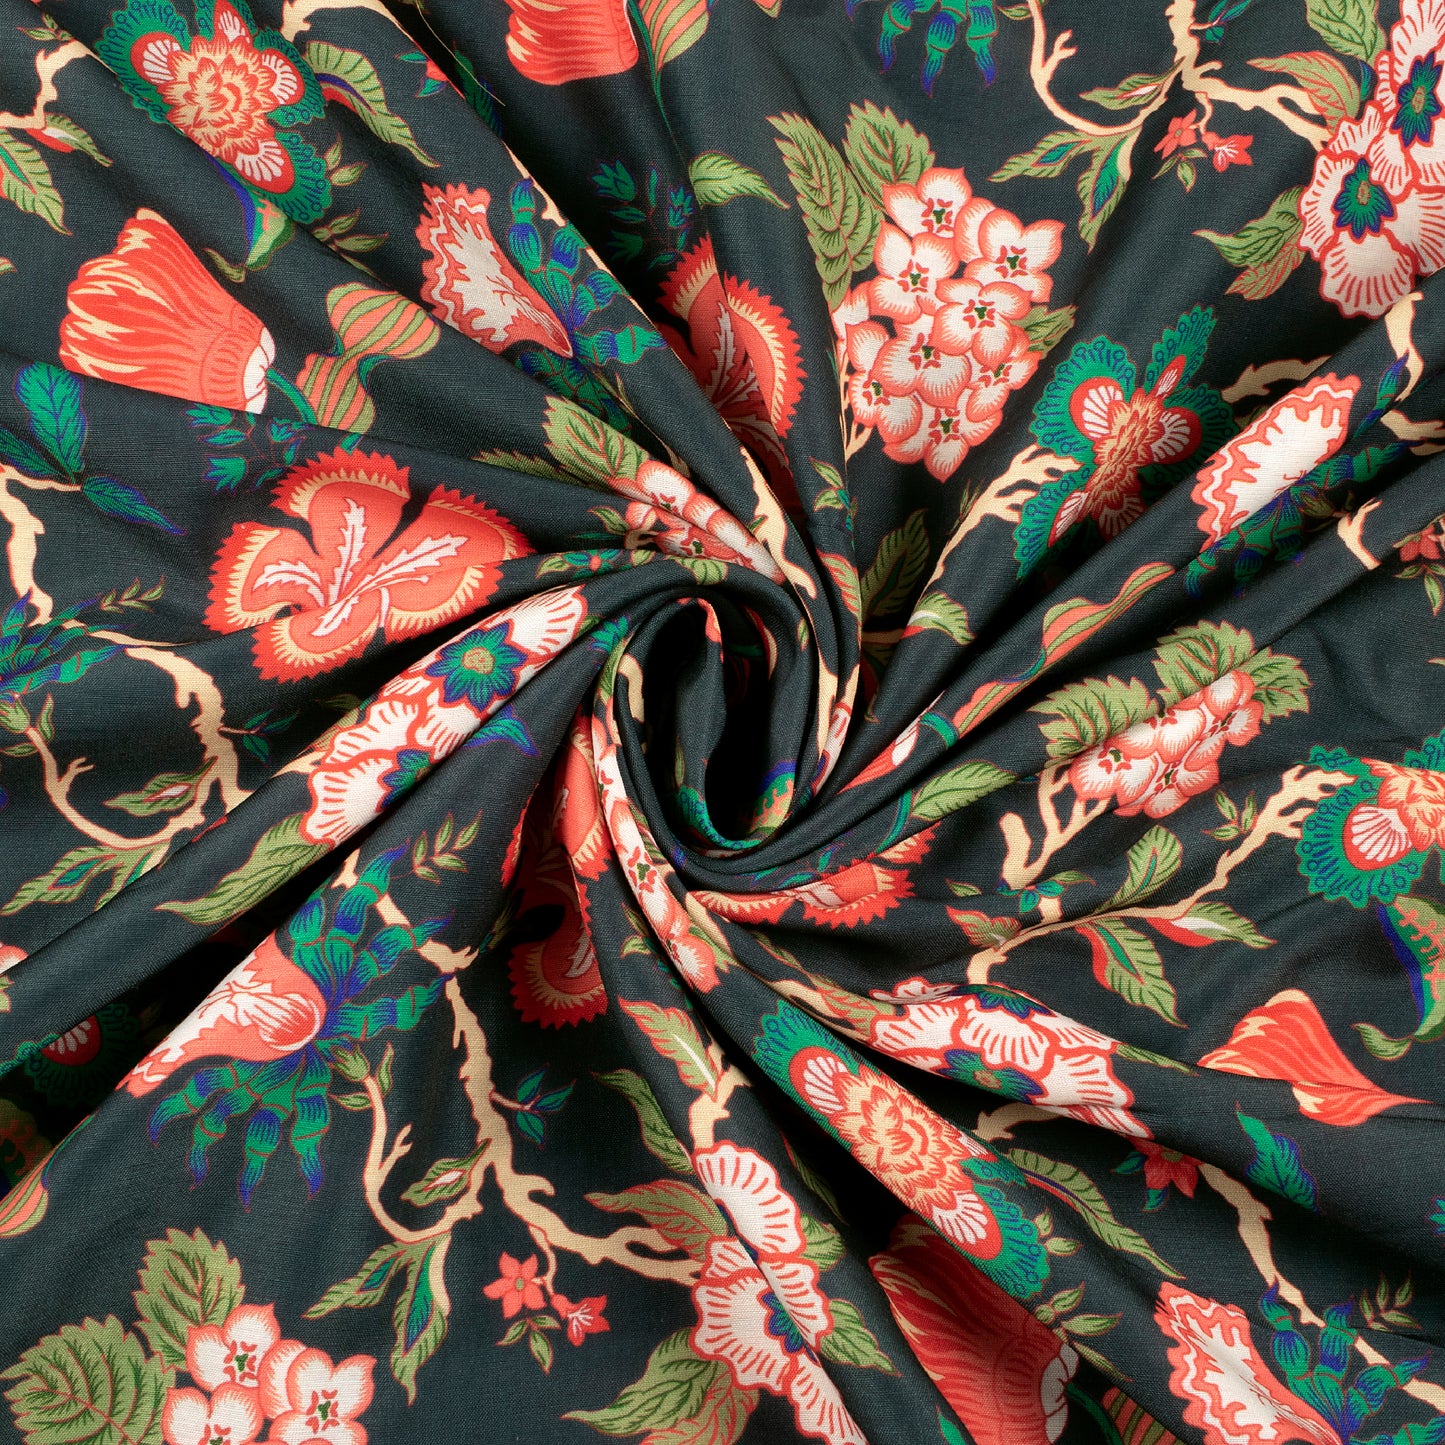 Botanical Beauty Digital Print Modal Satin Fabric